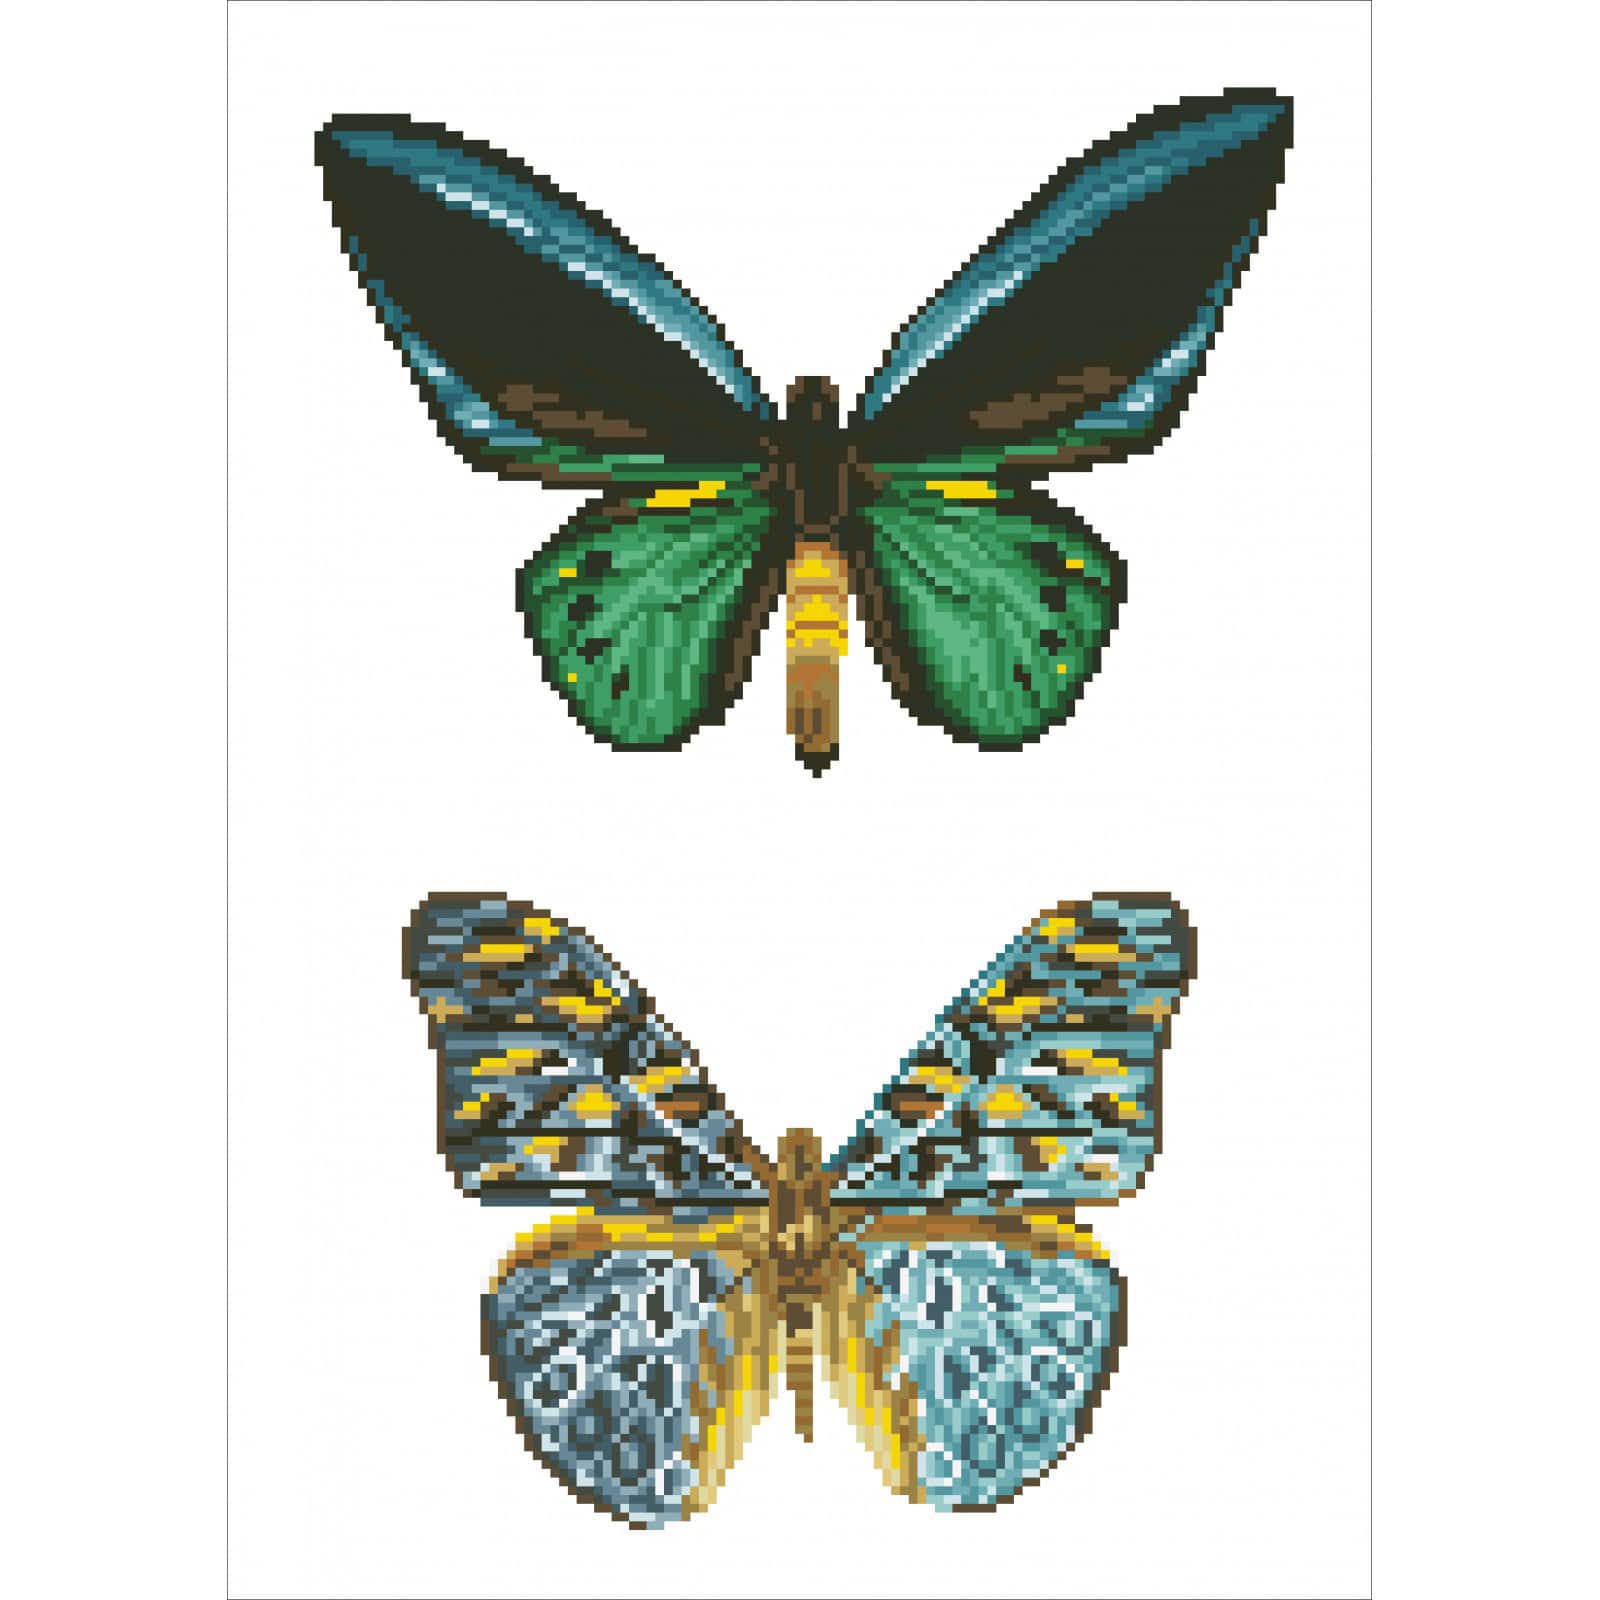 Diamond Dotz&#xAE; Intermediate Level Antique Butterflies Diamond Painting Kit